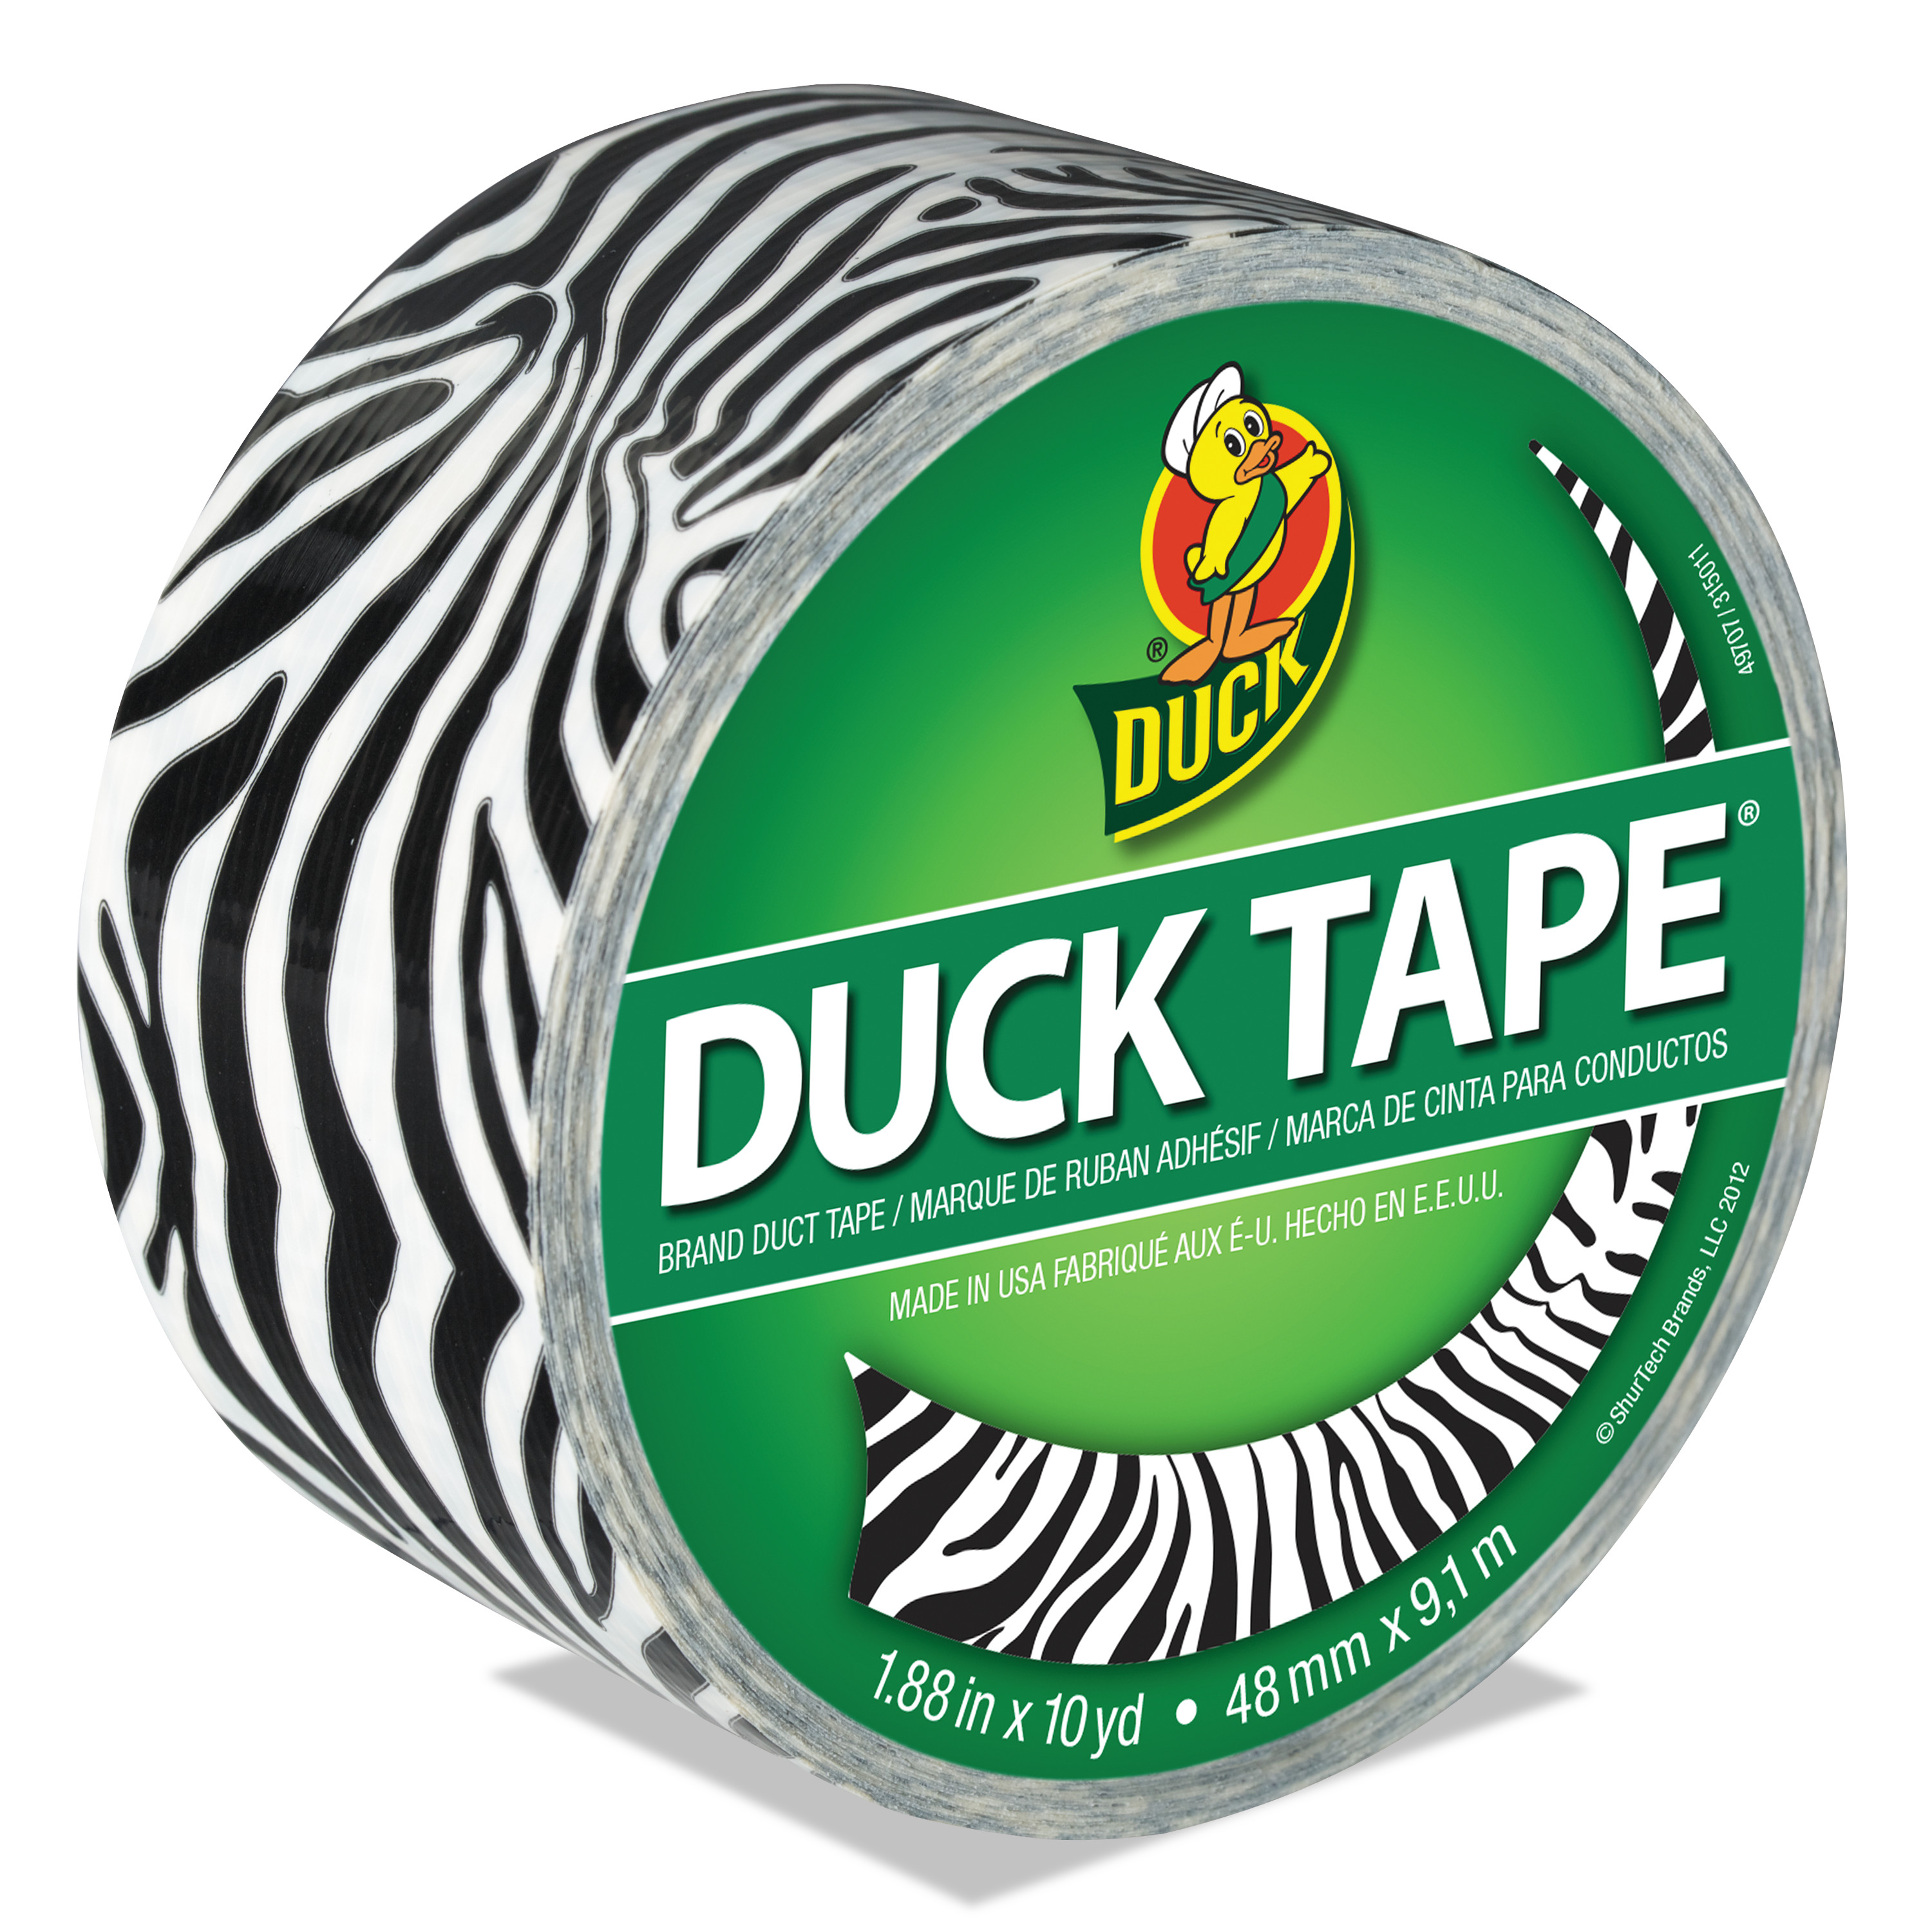  Duck 1398132 Colored Duct Tape, 3 Core, 1.88 x 10 yds, Black/White Zebra (DUC1398132) 